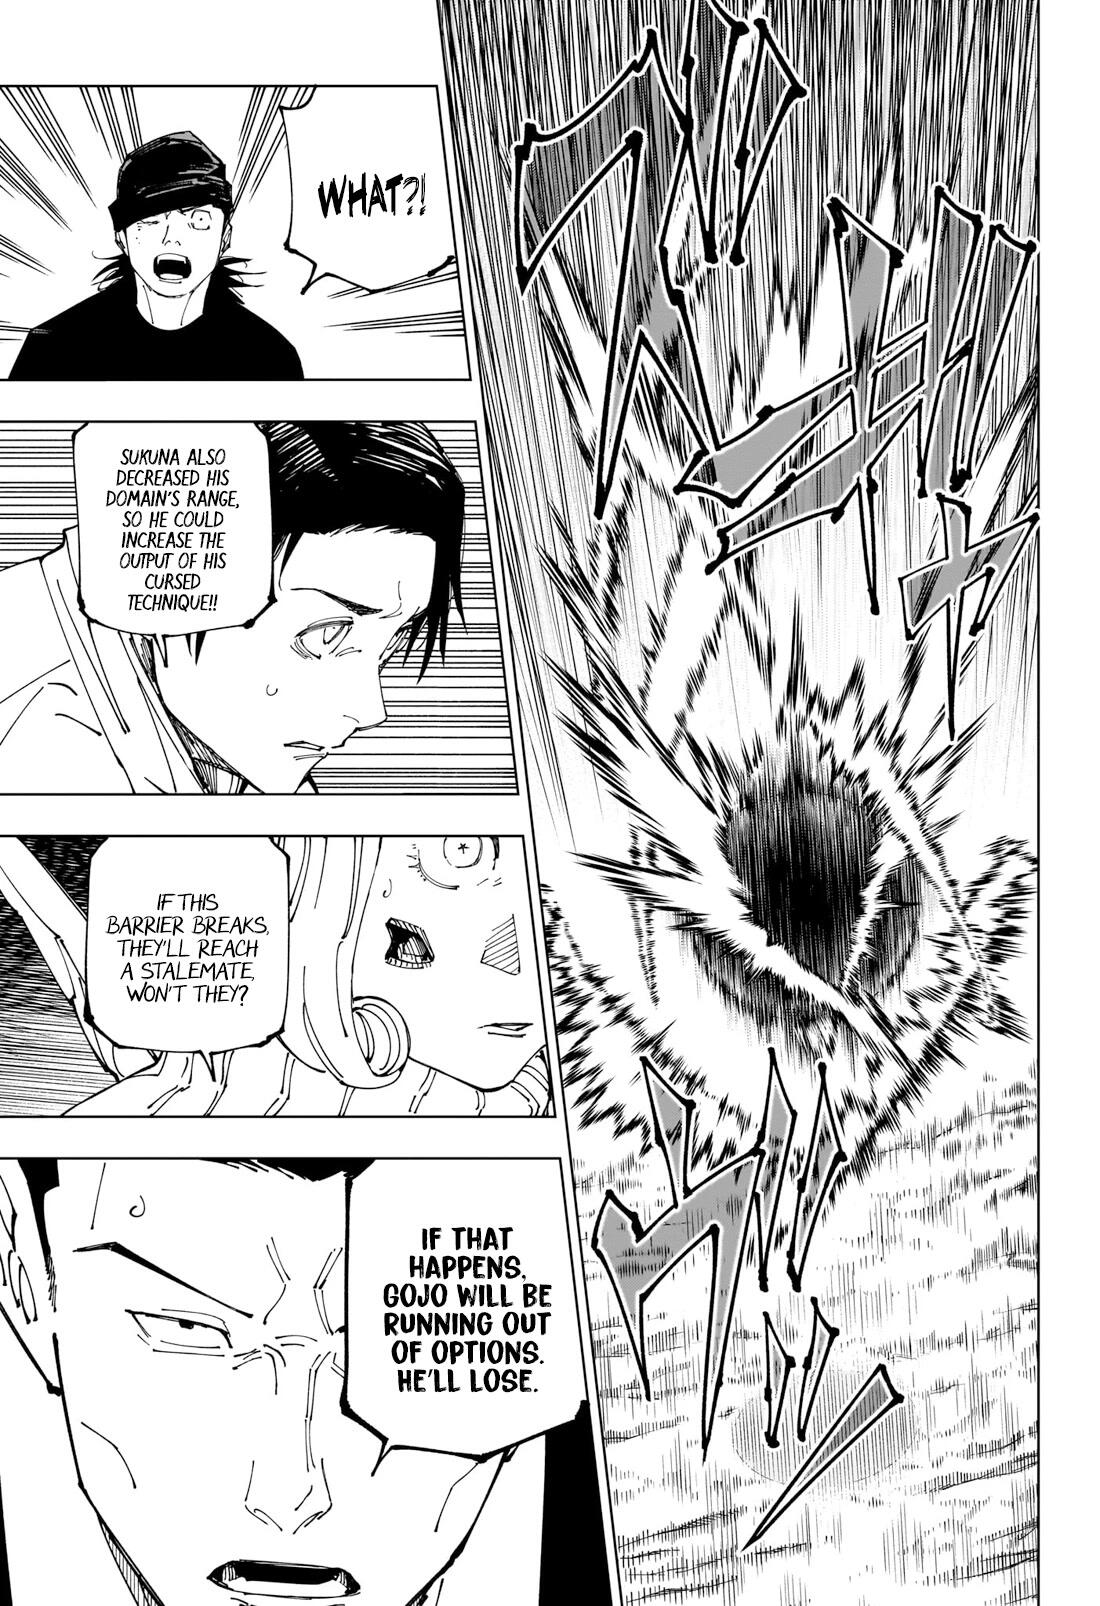 Jujutsu Kaisen Chapter 228: The Decisive Battle In The Uninhabited, Demon-Infested Shinjuku ⑥ page 6 - Mangakakalot